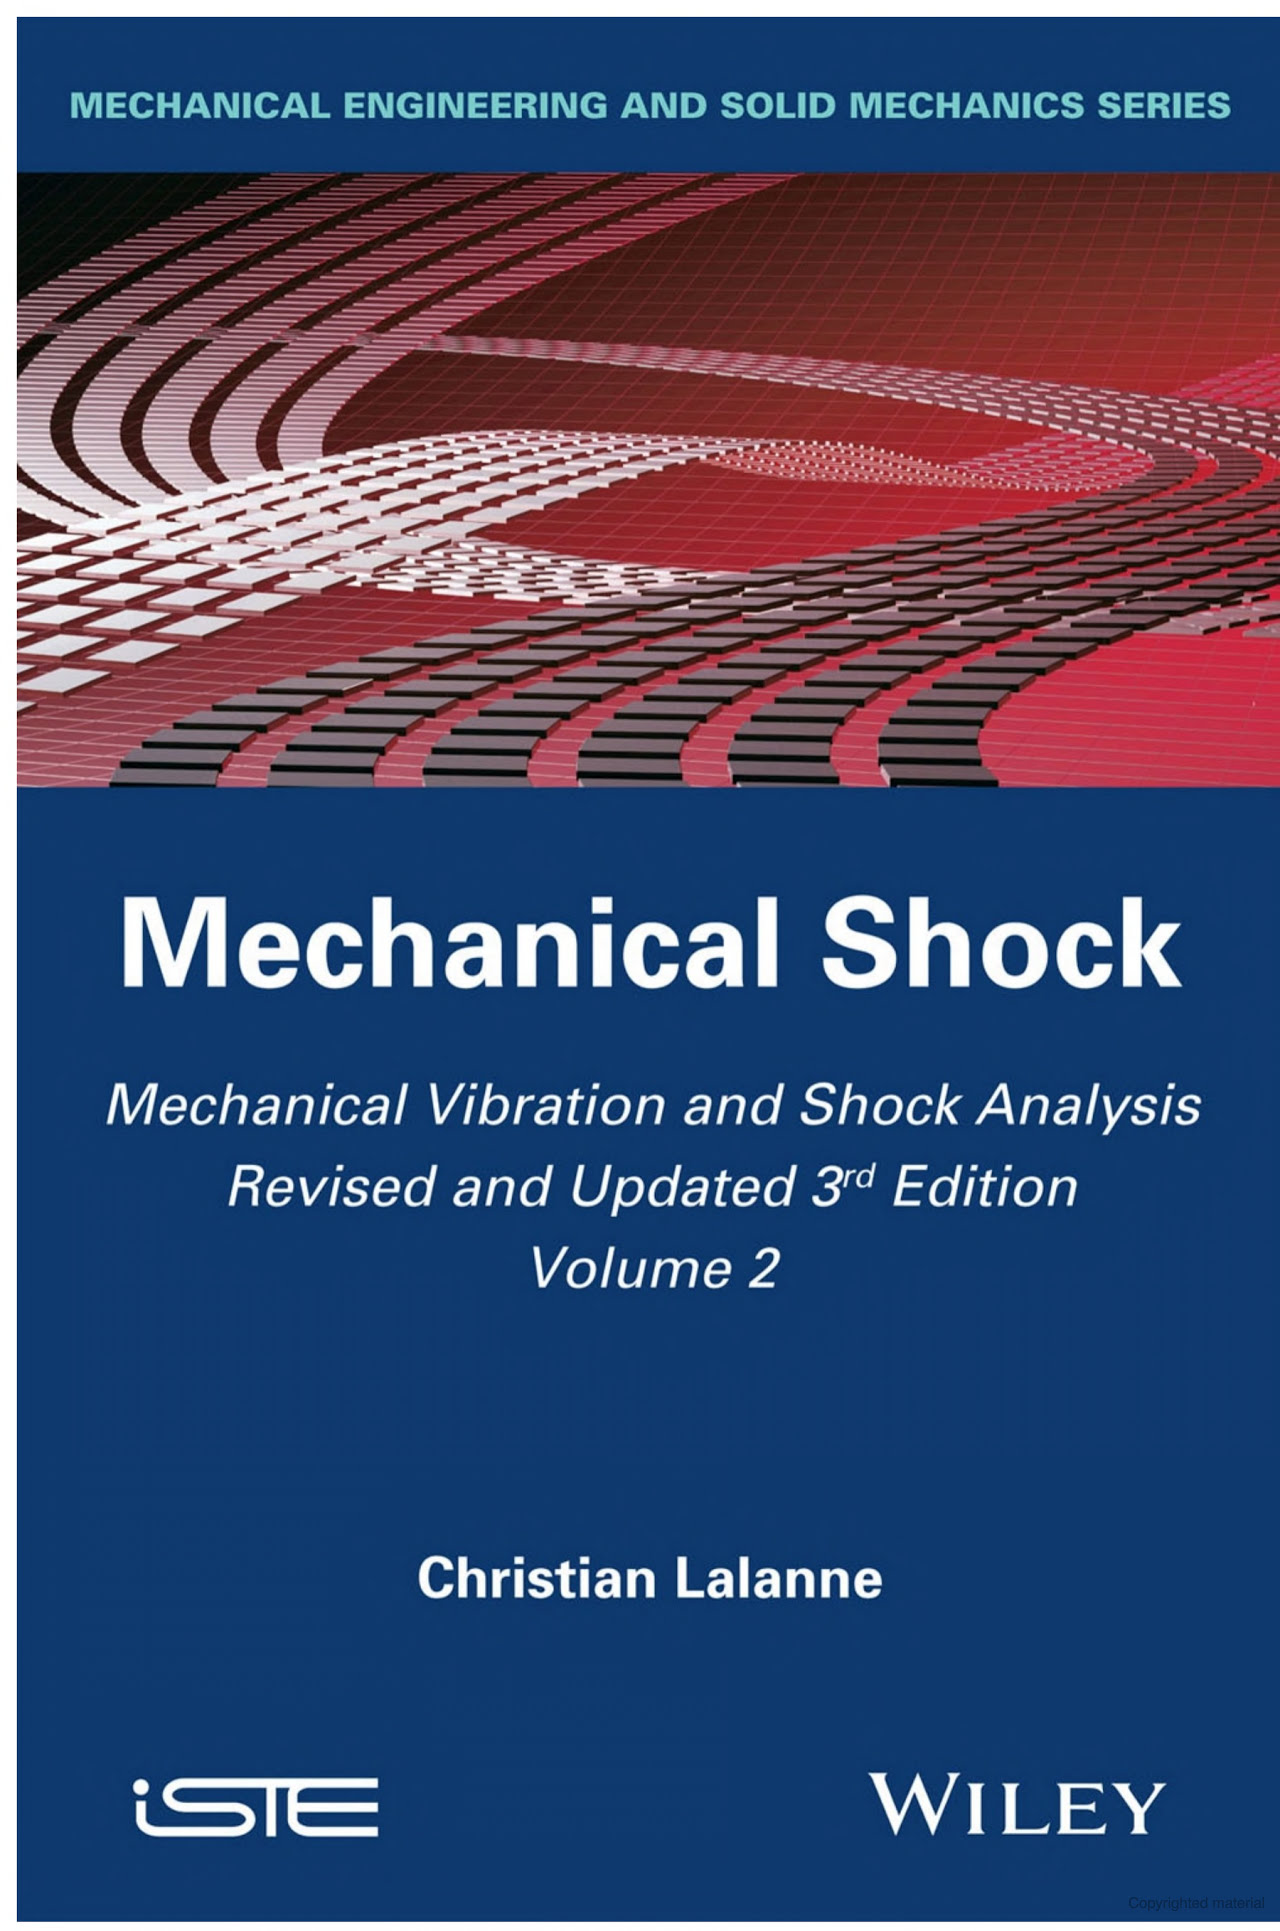 Mechanical shock